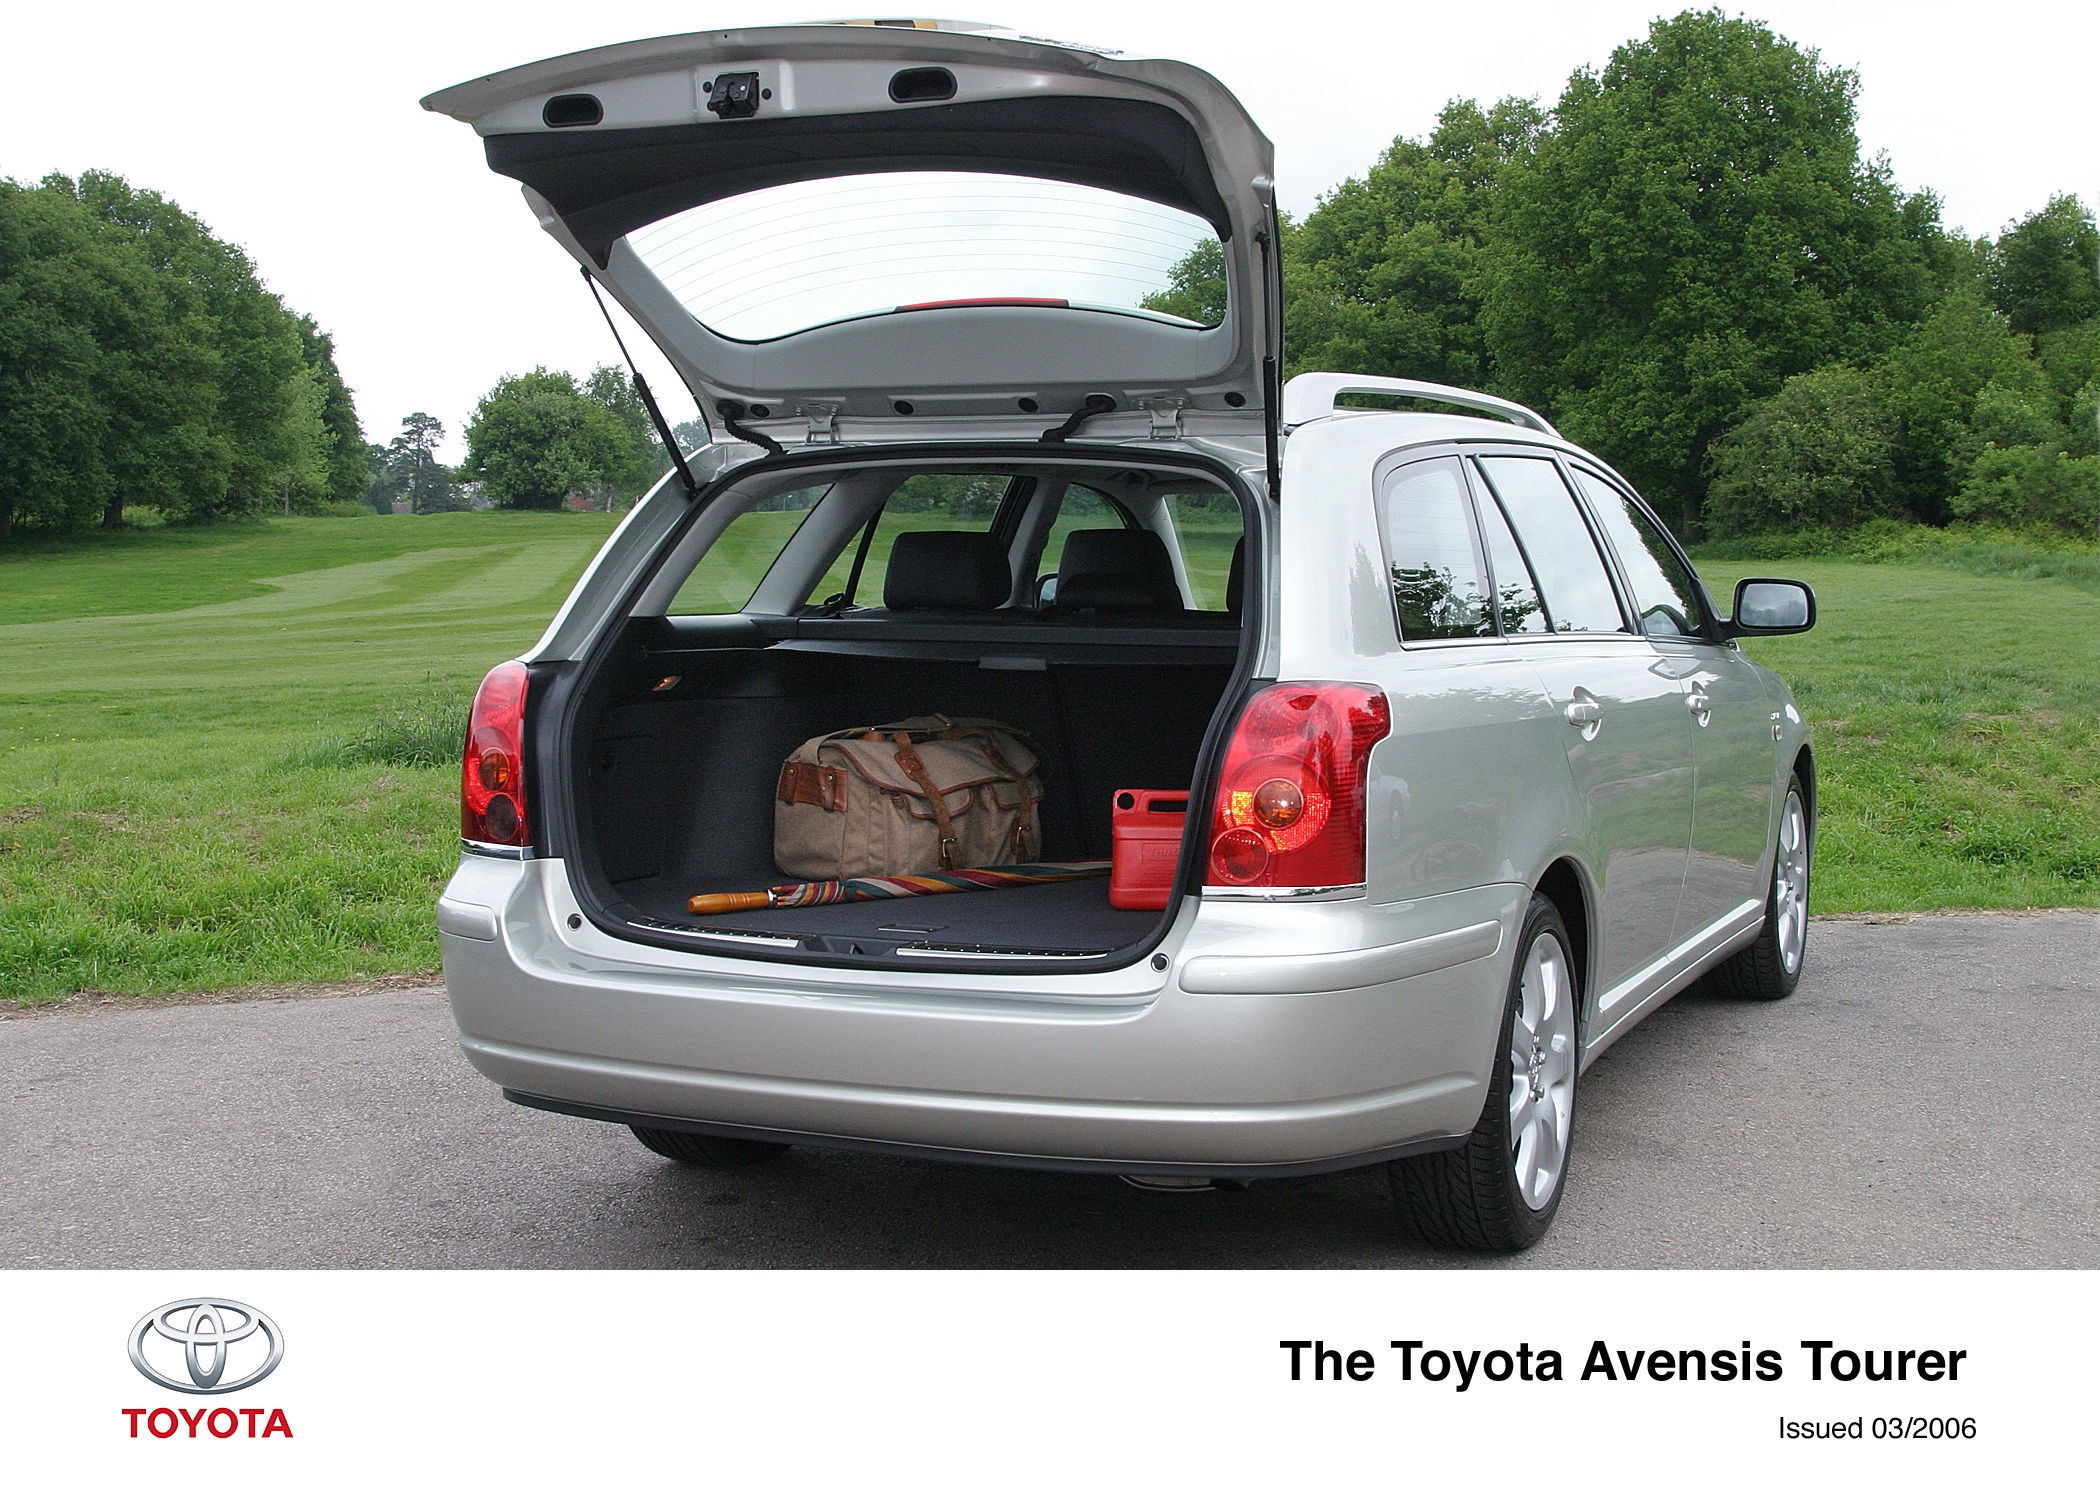 Машины бу универсалы. Toyota Avensis 2 универсал. Универсал Тойота Авенсис 2008 багажник. Toyota Avensis Universal с багажником 2007. Toyota Avensis 2008 универсал багажник.